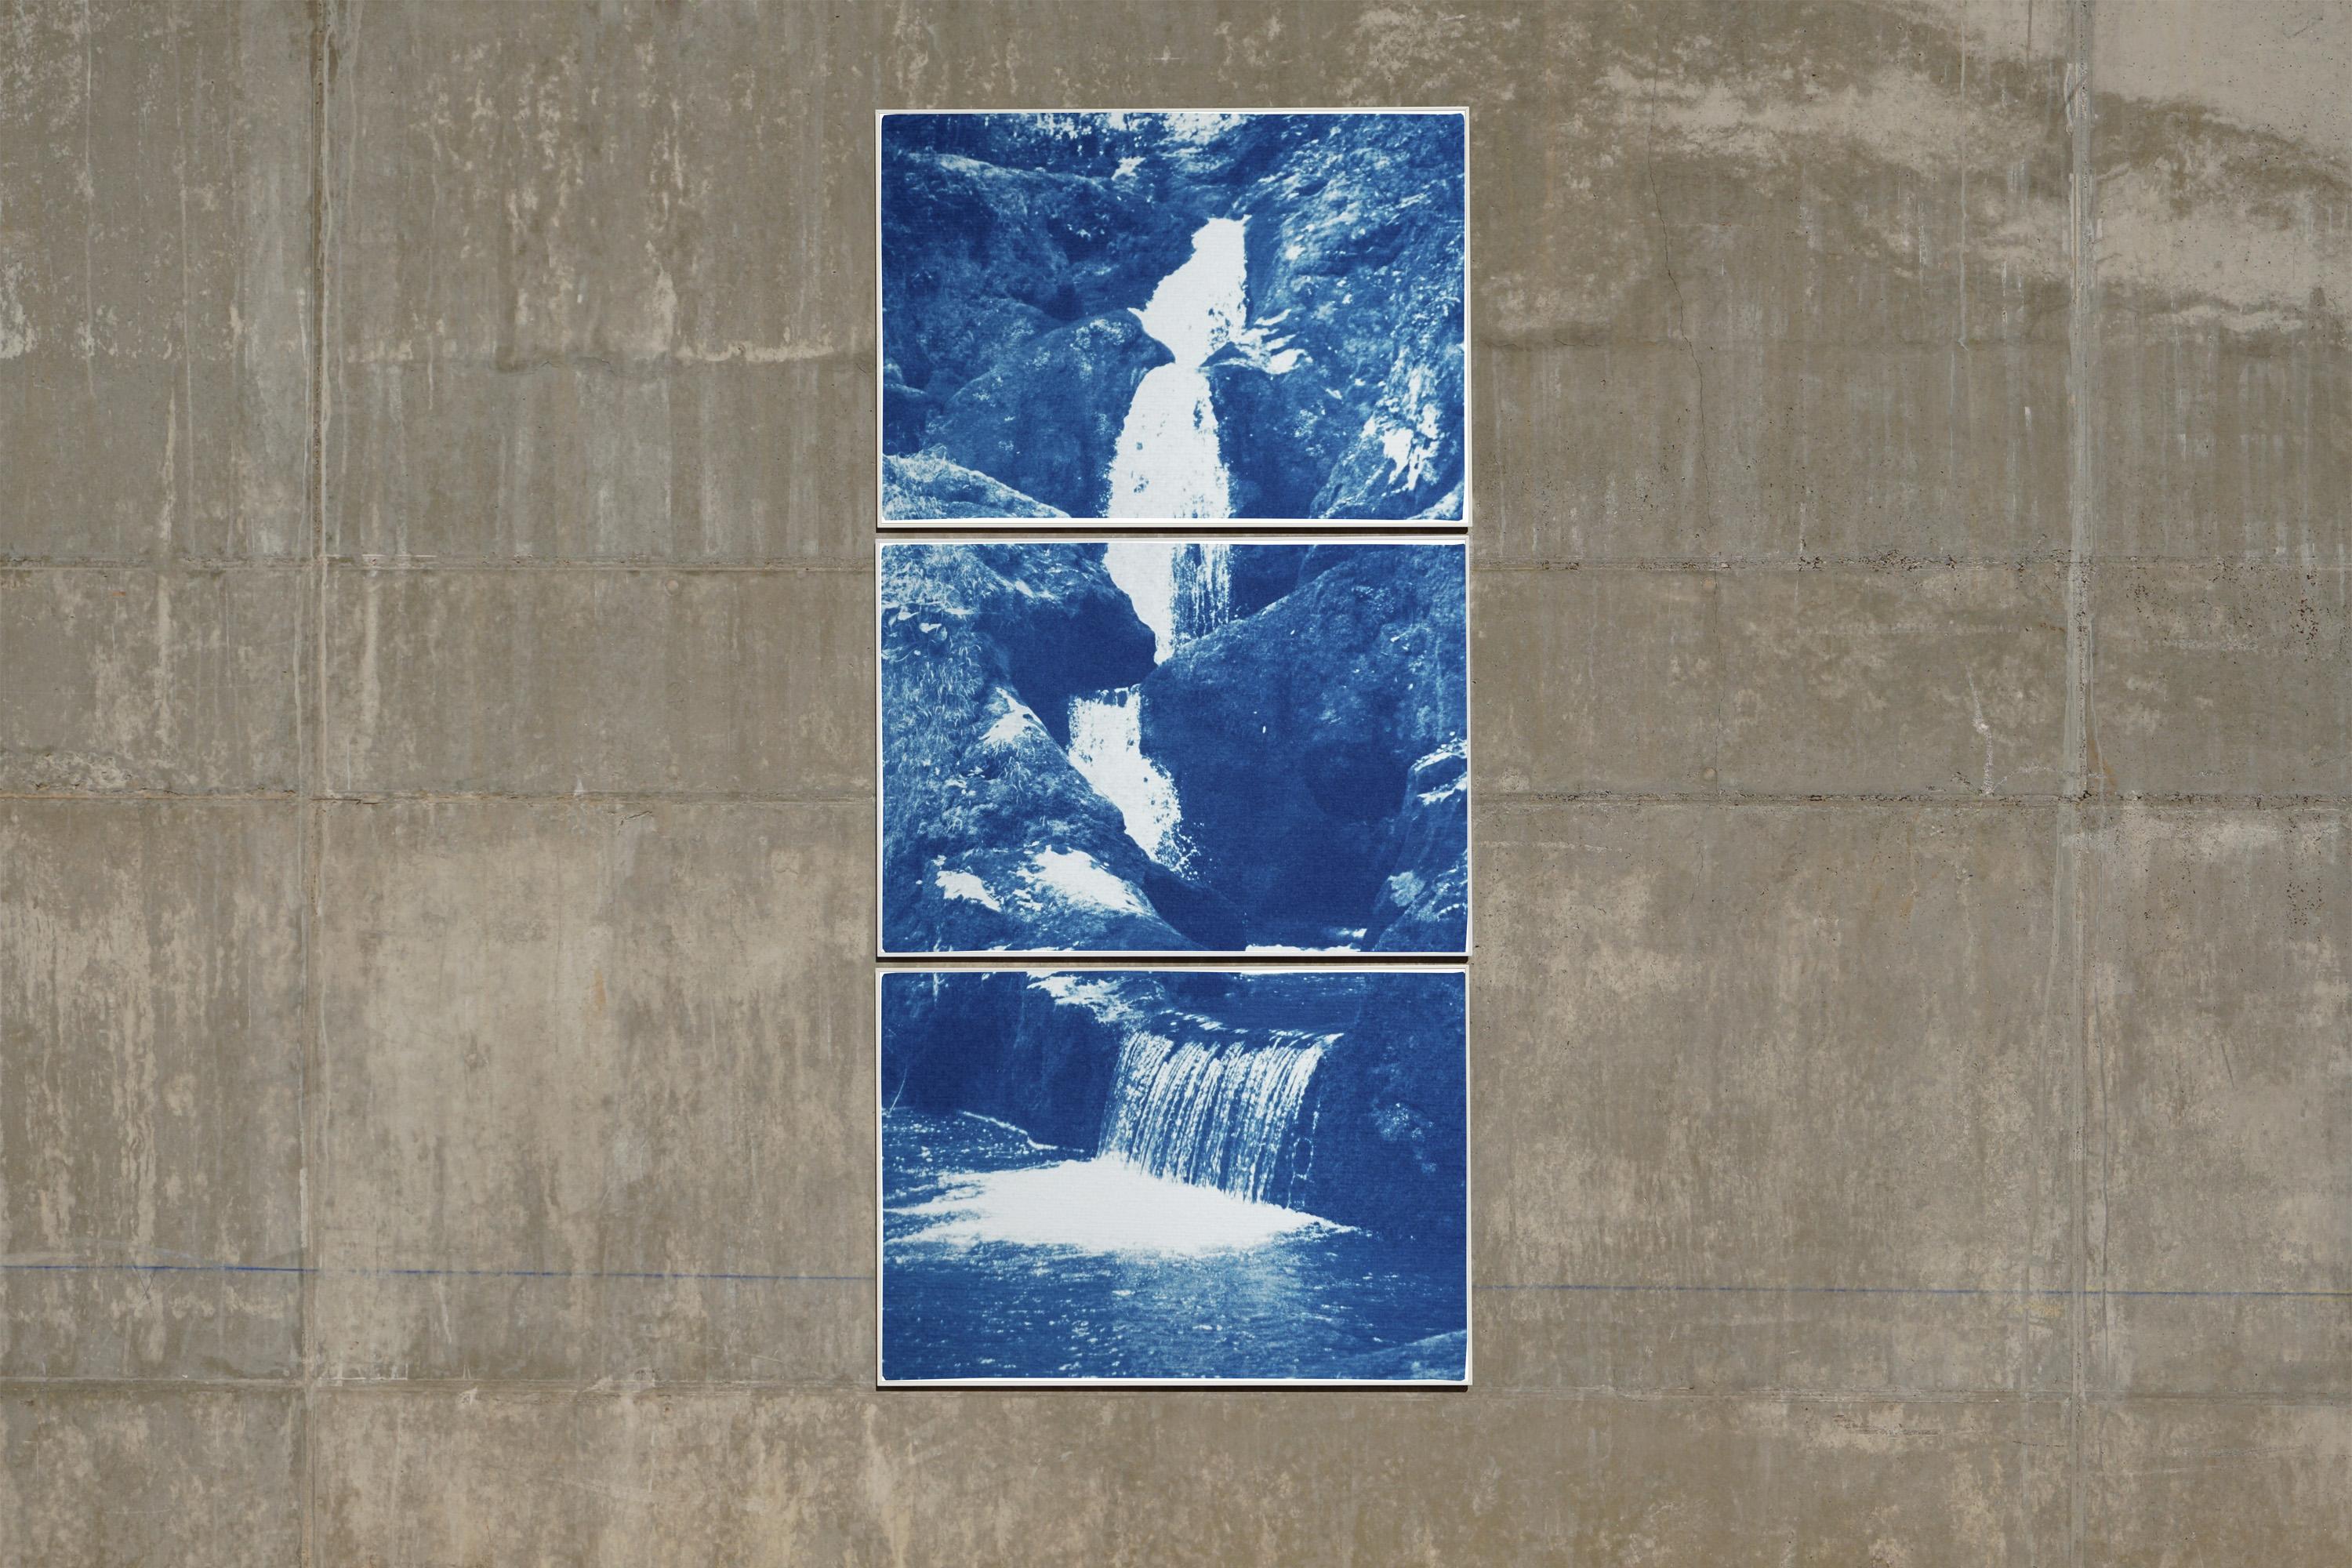 Vertical Triptych of Zen Forest Waterfall, Multi Panel Cyanotype, Feng Shui Art  - Photograph by Kind of Cyan